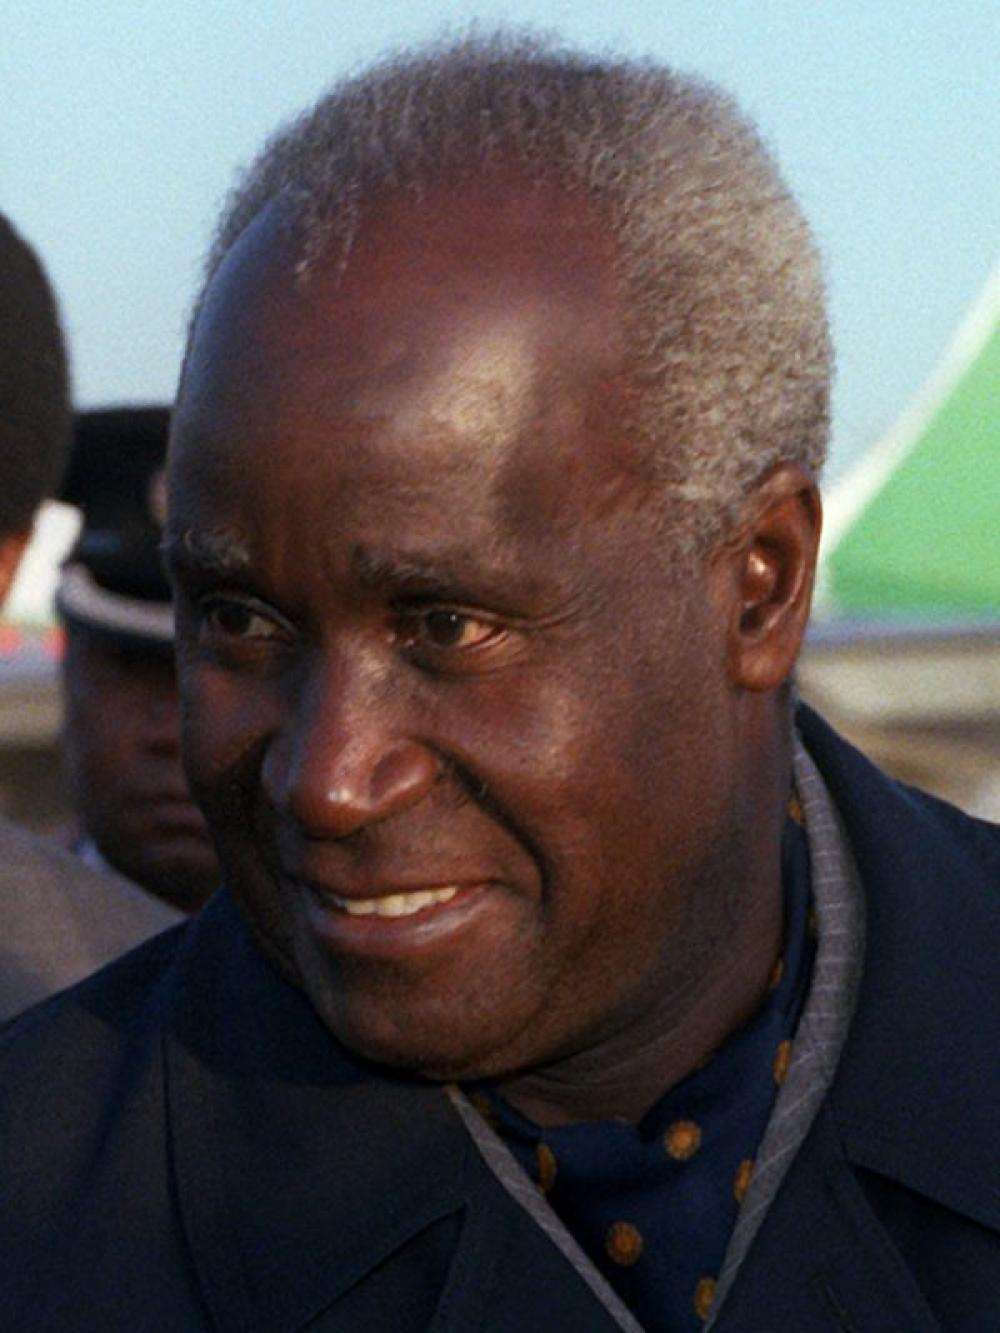 Zambia's former president and liberation hero Kenneth Kaunda dies at 97